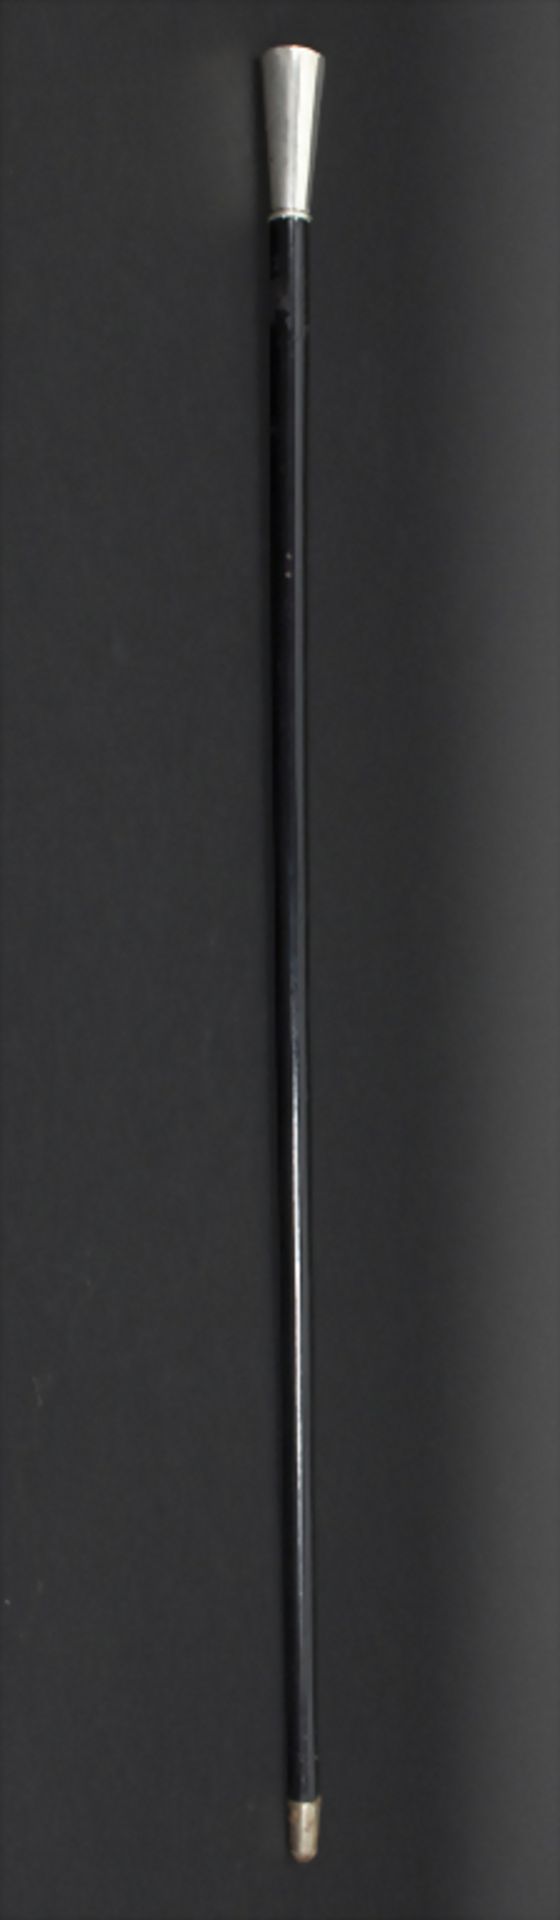 Gehstock mit Silberknauf / A cane with silver handle, Ende 19. Jh.Material: Hartholz, ebonisiert ( - Bild 2 aus 6